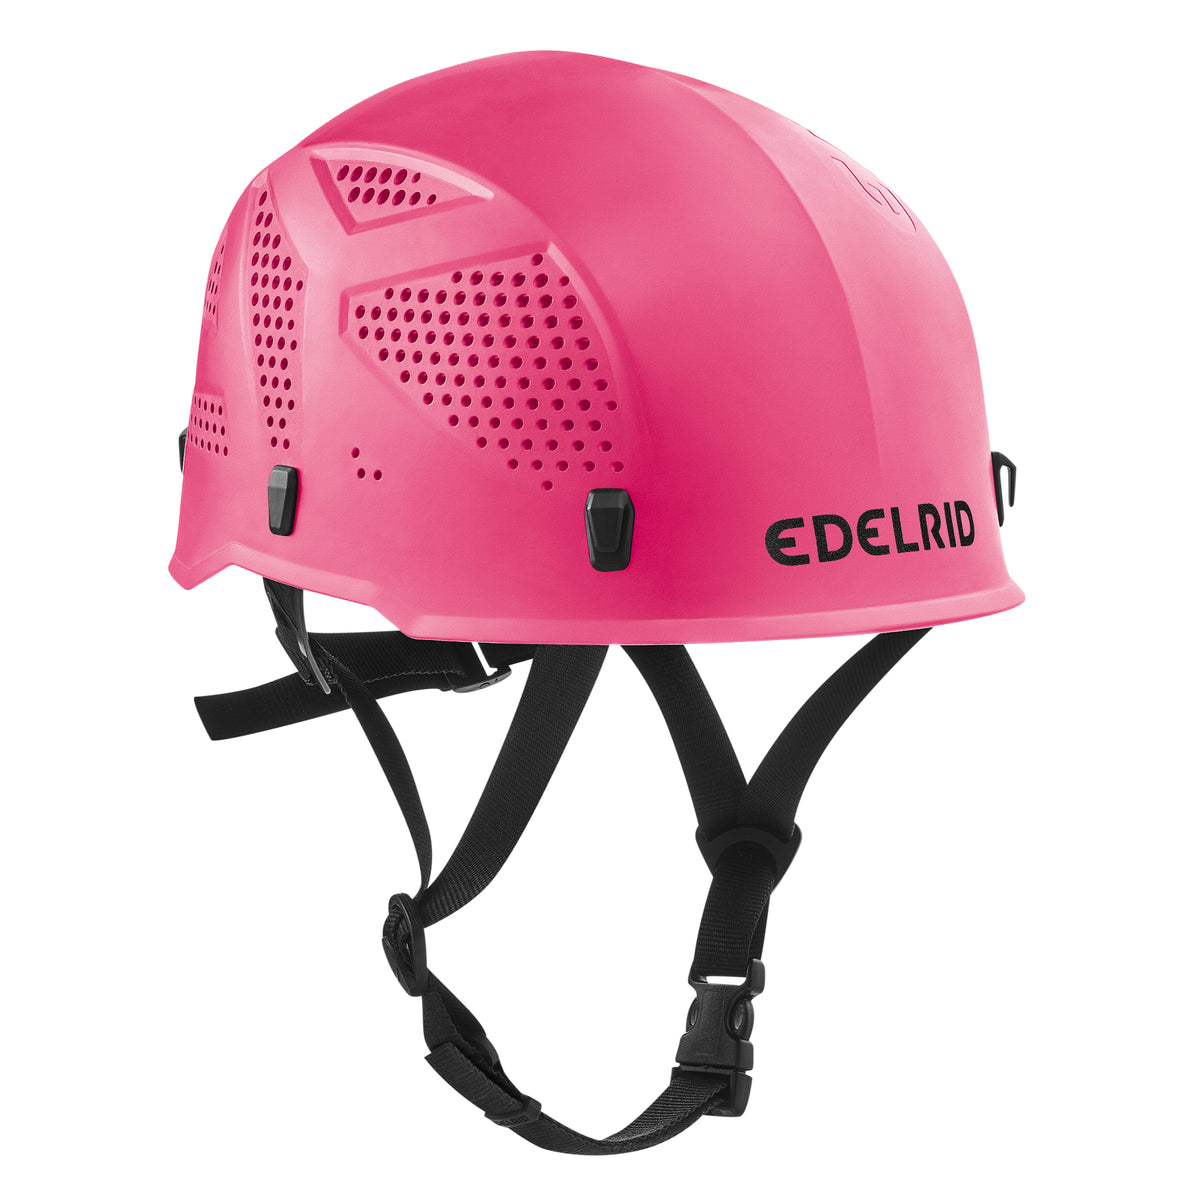 Edelrid Ultralight helmet in granita colour